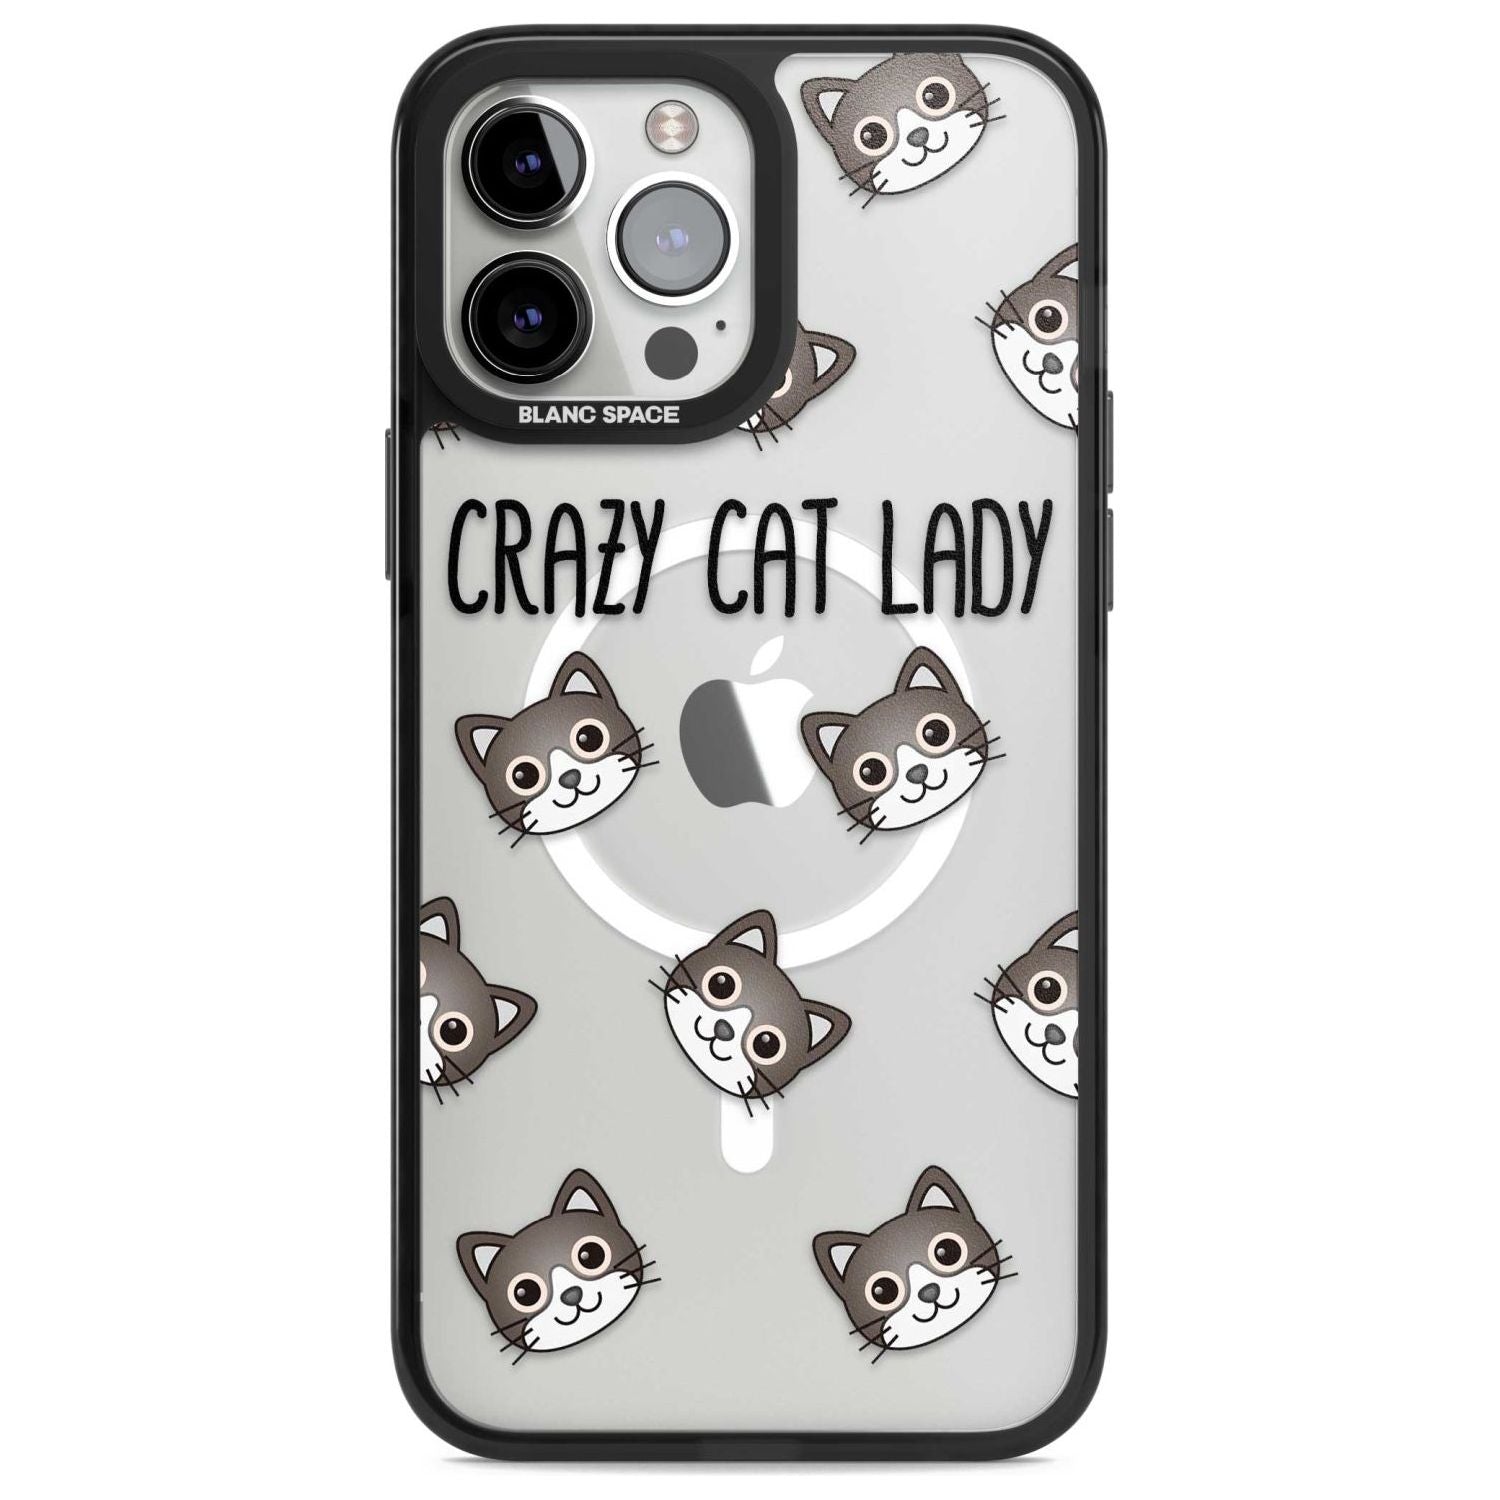 Crazy Cat Lady Phone Case iPhone 13 Pro Max / Magsafe Black Impact Case Blanc Space